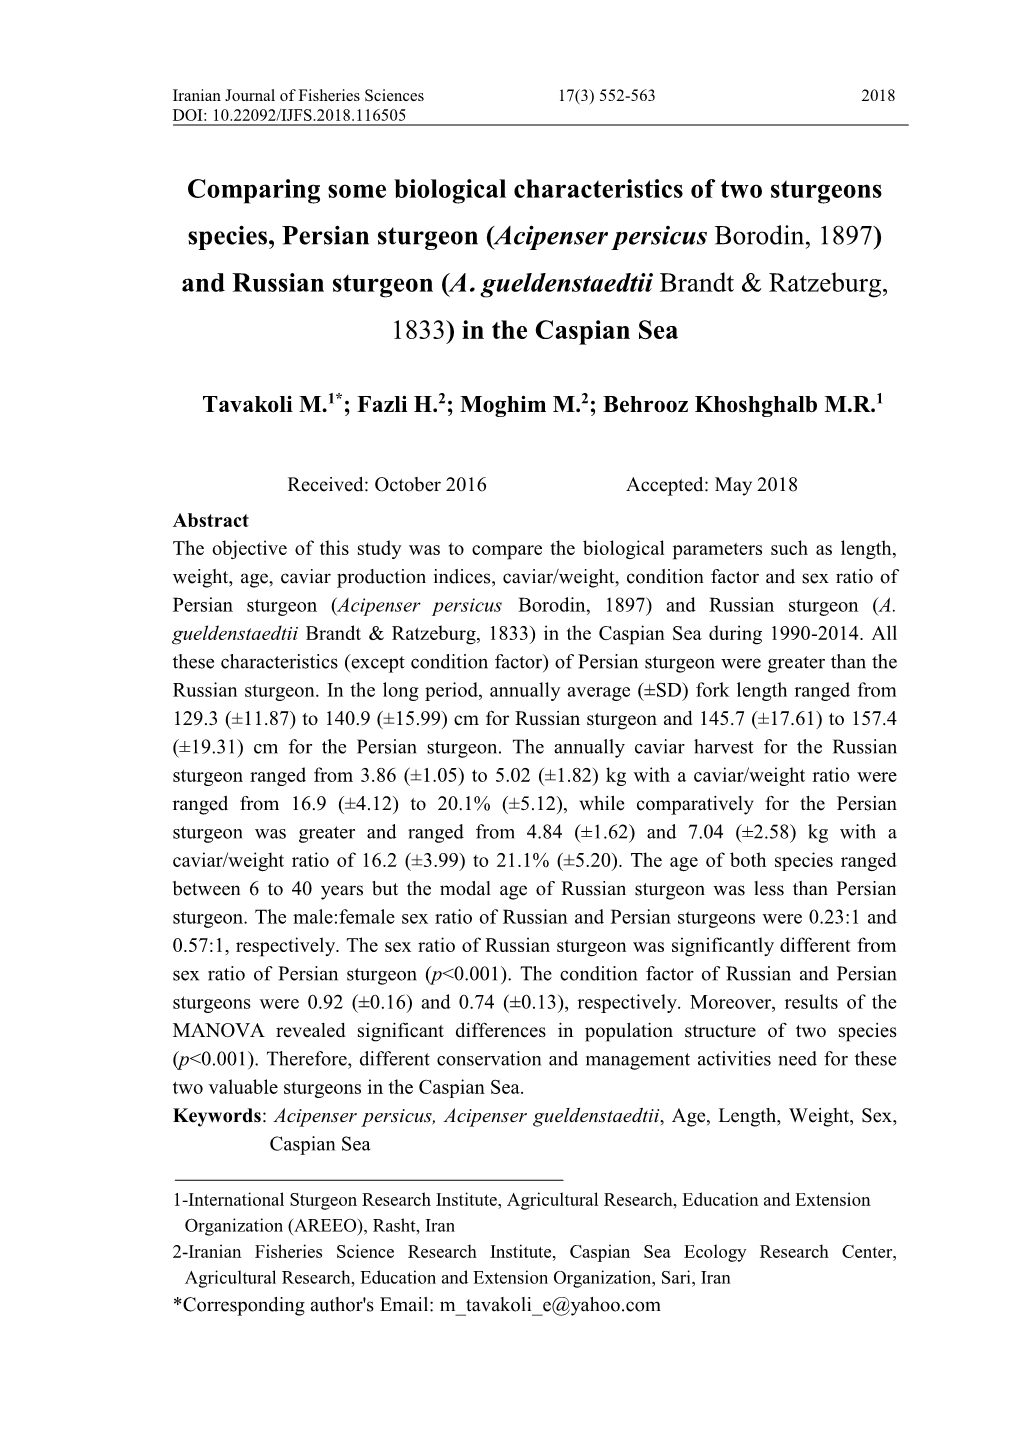 Comparing Some Biological Characteristics of Two Sturgeons Species, Persian Sturgeon (Acipenser Persicus Borodin, 1897) and Russian Sturgeon (A